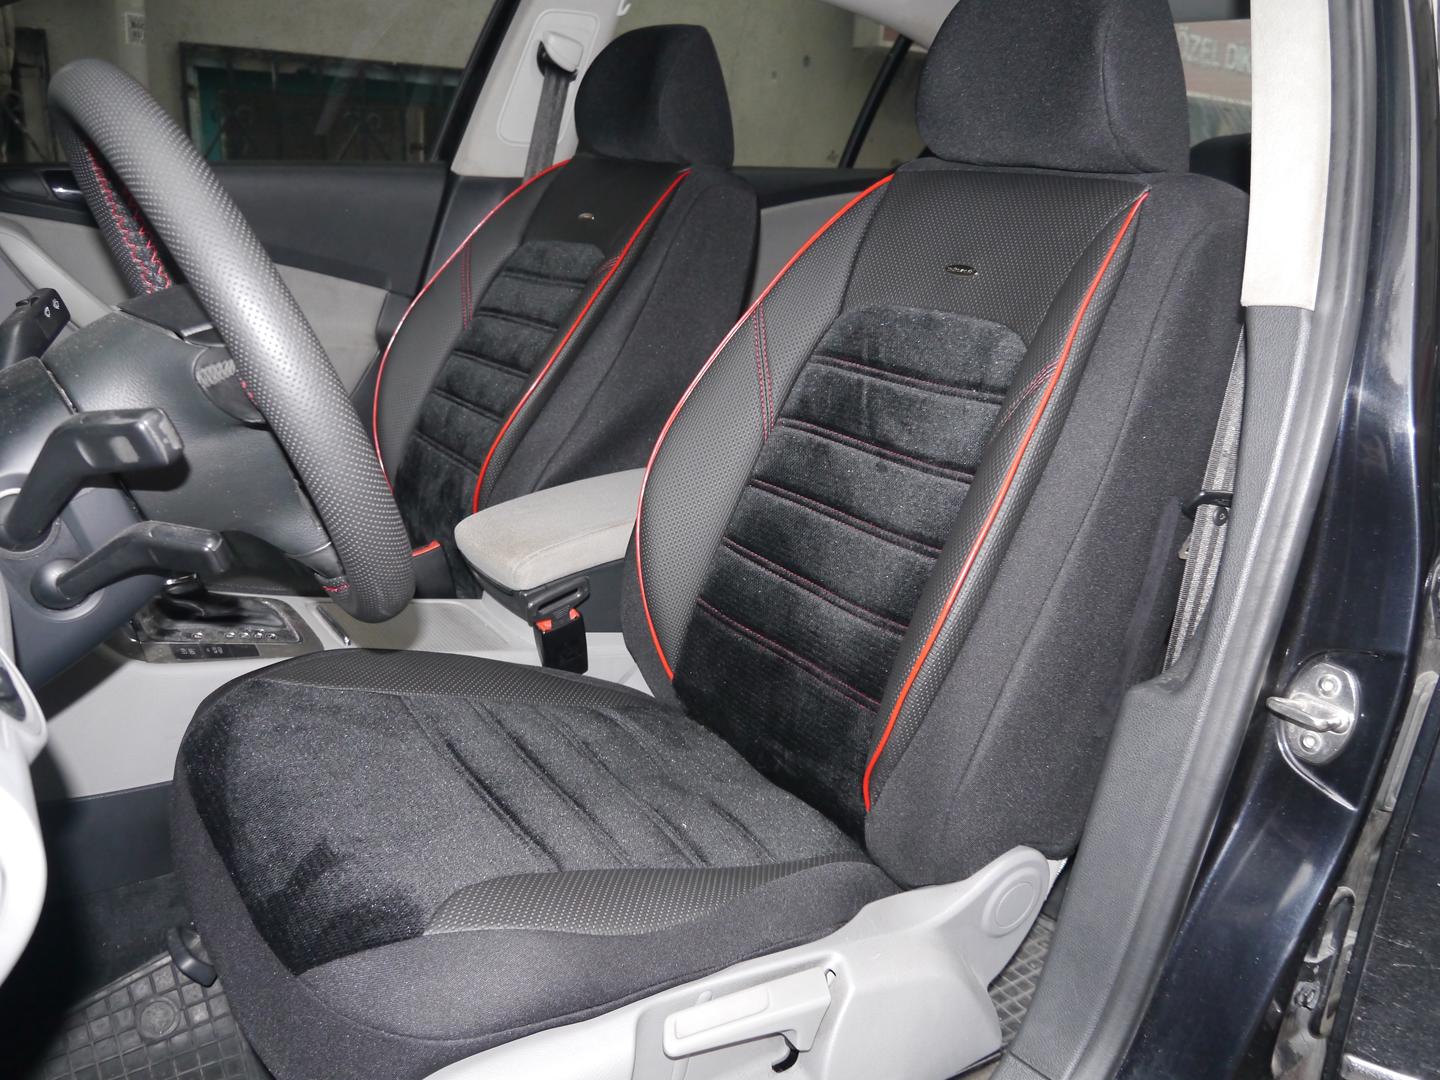 Housses sièges voiture Volkswagen Amarok simili cuir